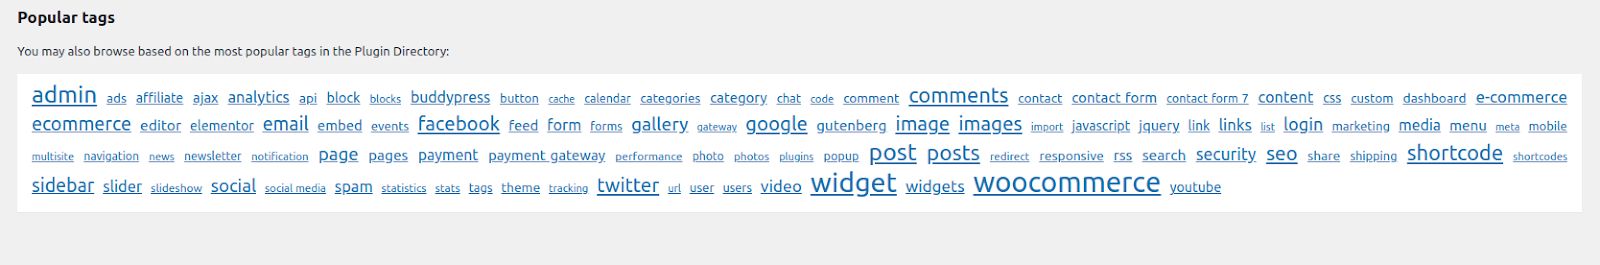 Popular tags for WordPress plugins